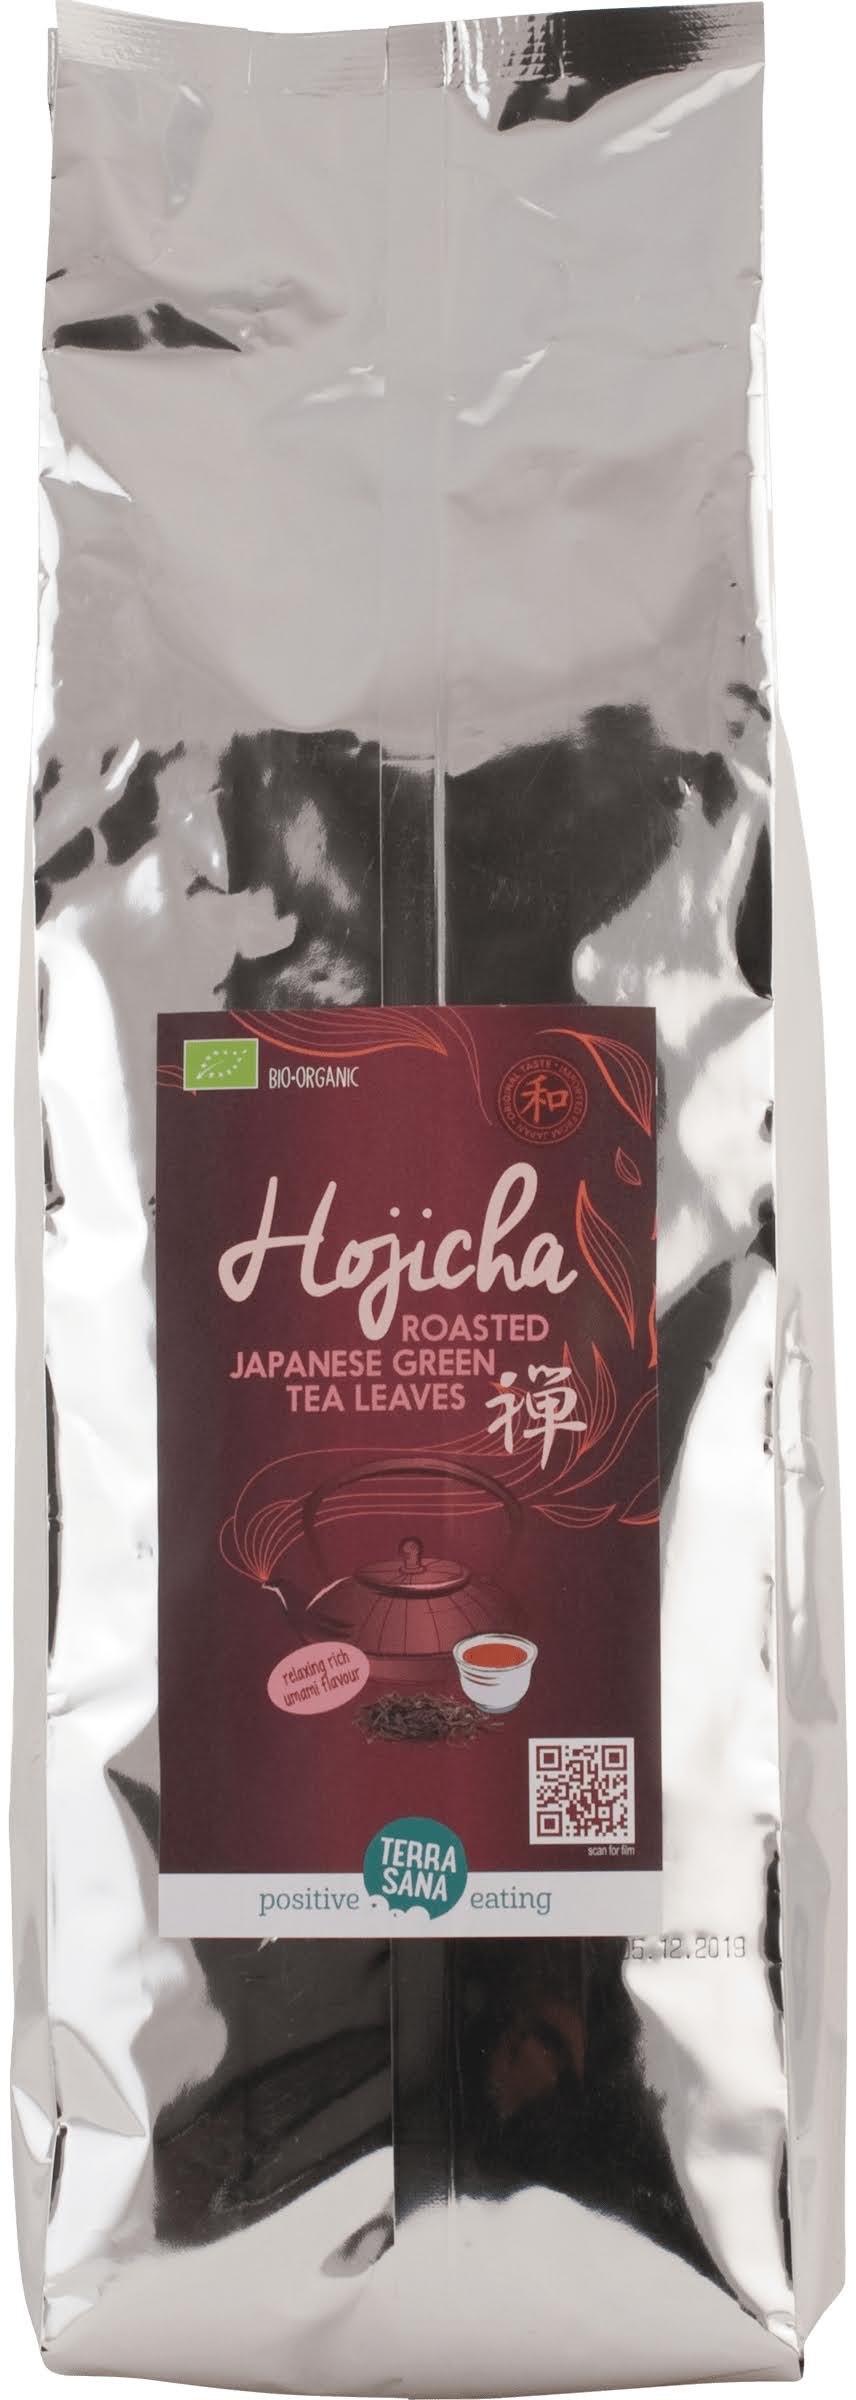 Hojicha (geröstete grüne Teeblätter)